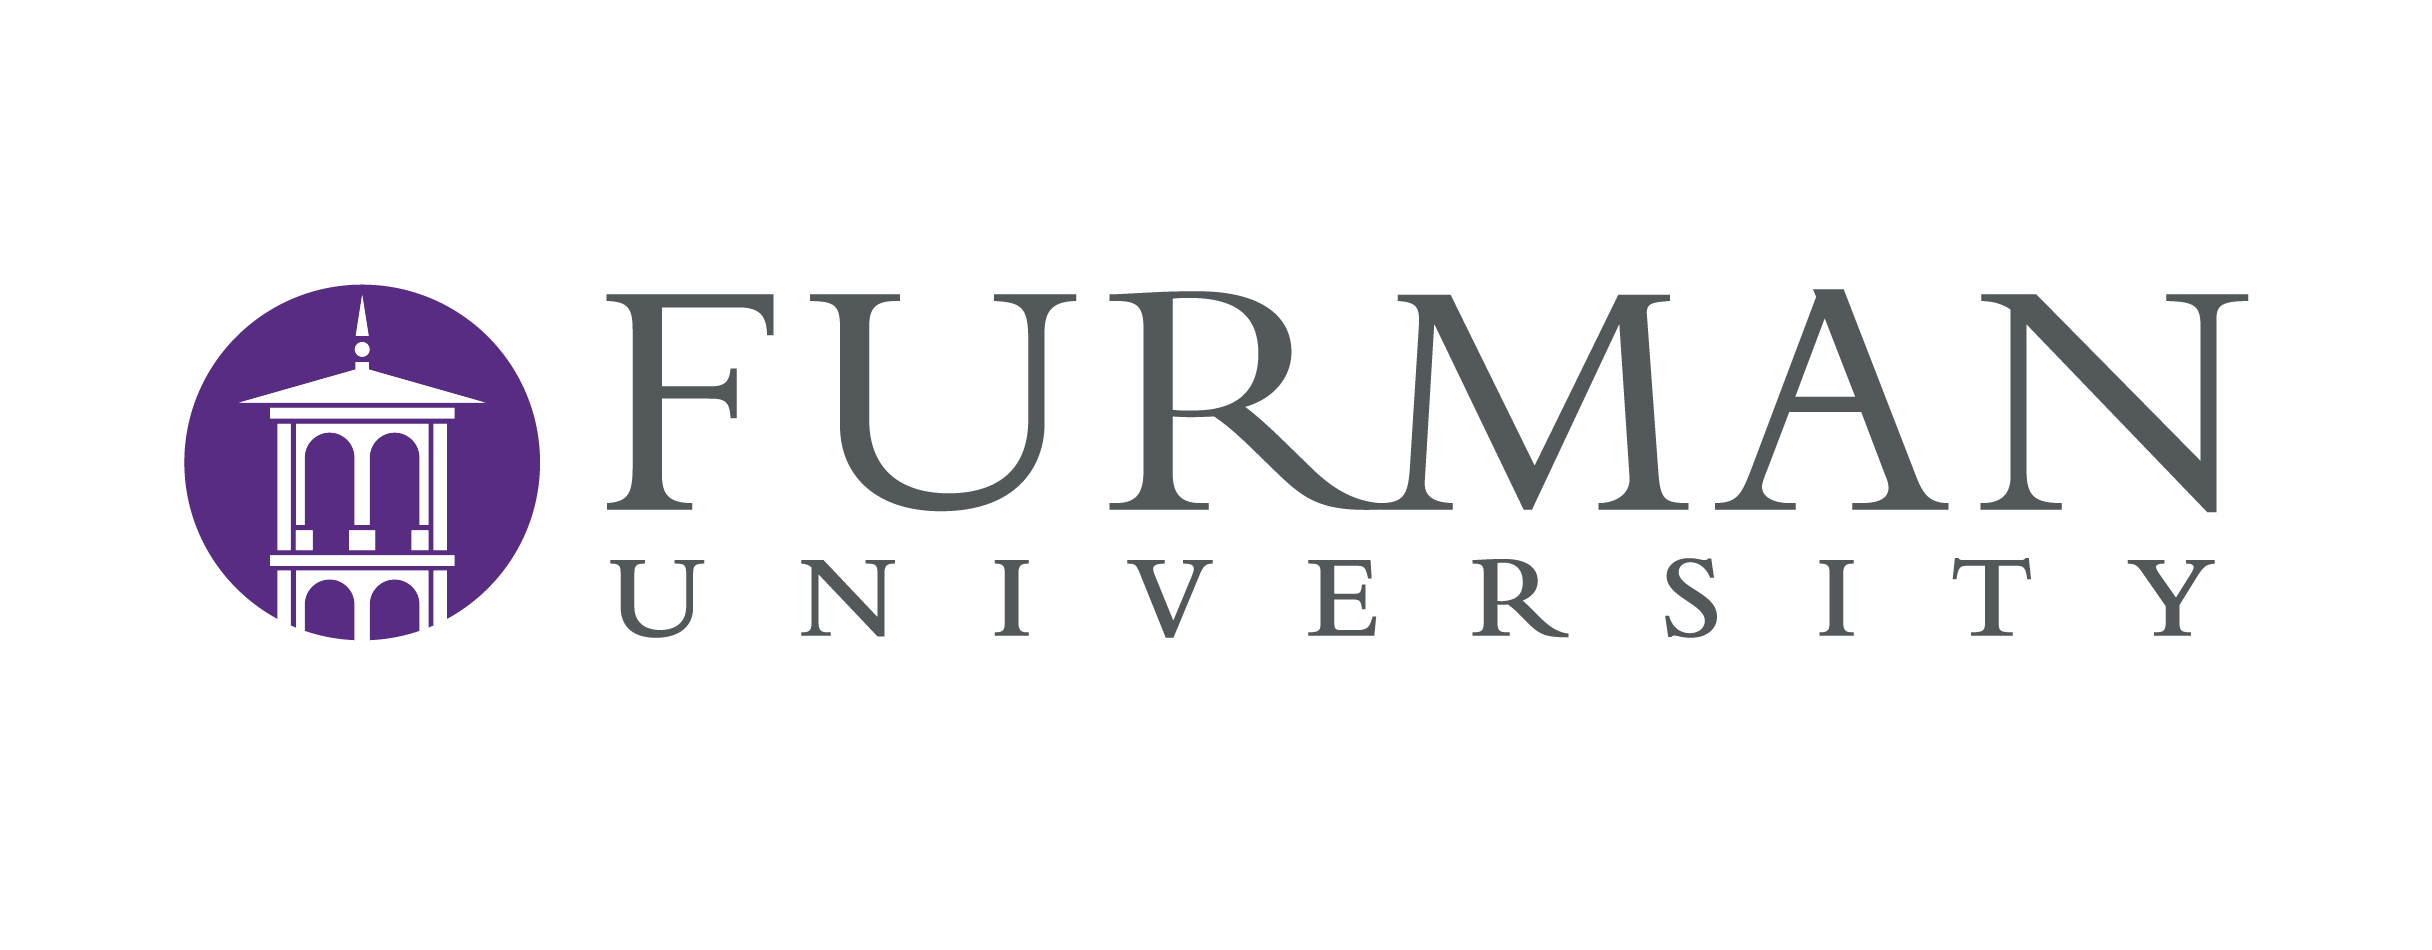 Featured Image For Furman University Testimonial